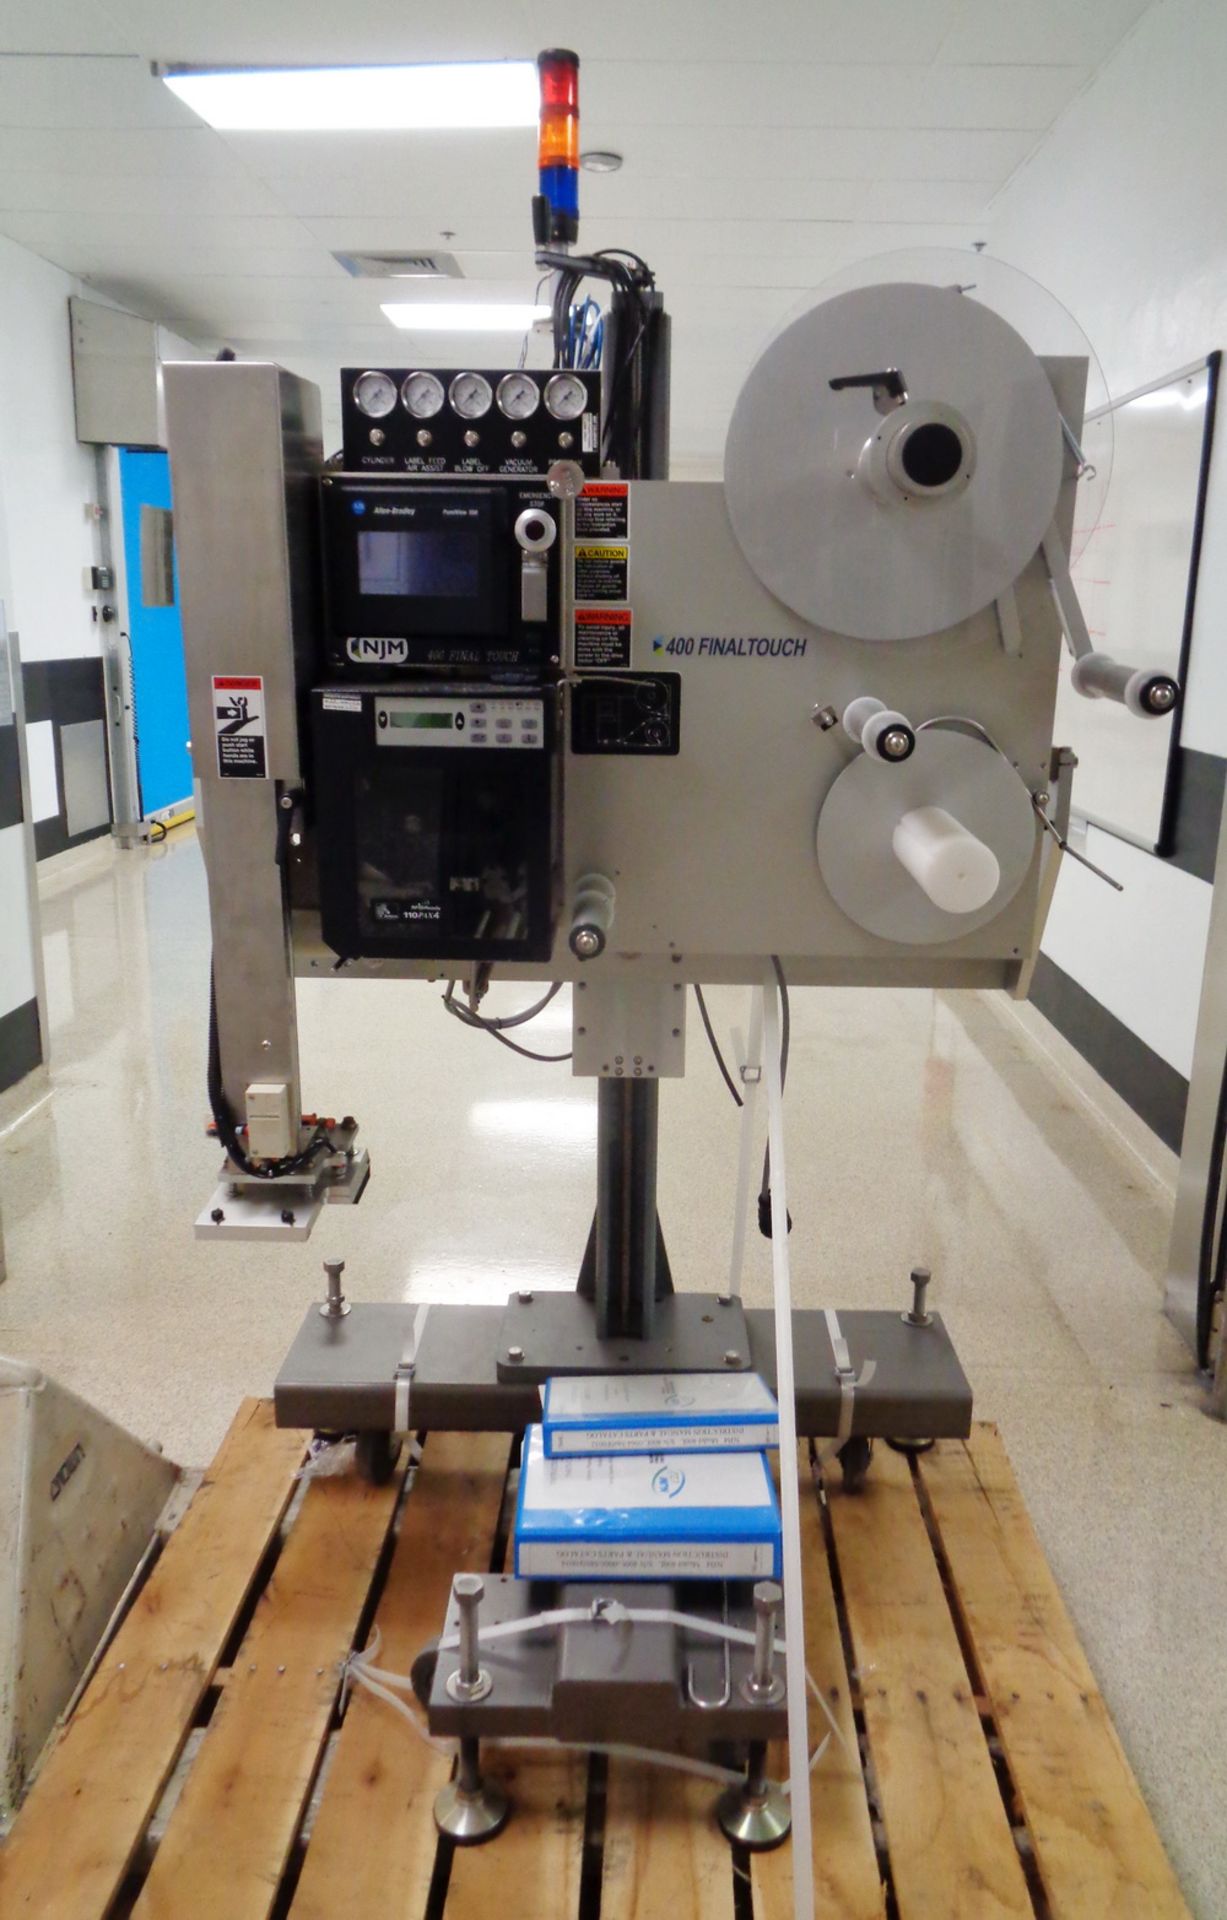 NJM Print and Apply or Preprinted Pressure Sensitive Labeler, Model 400L Final Touch